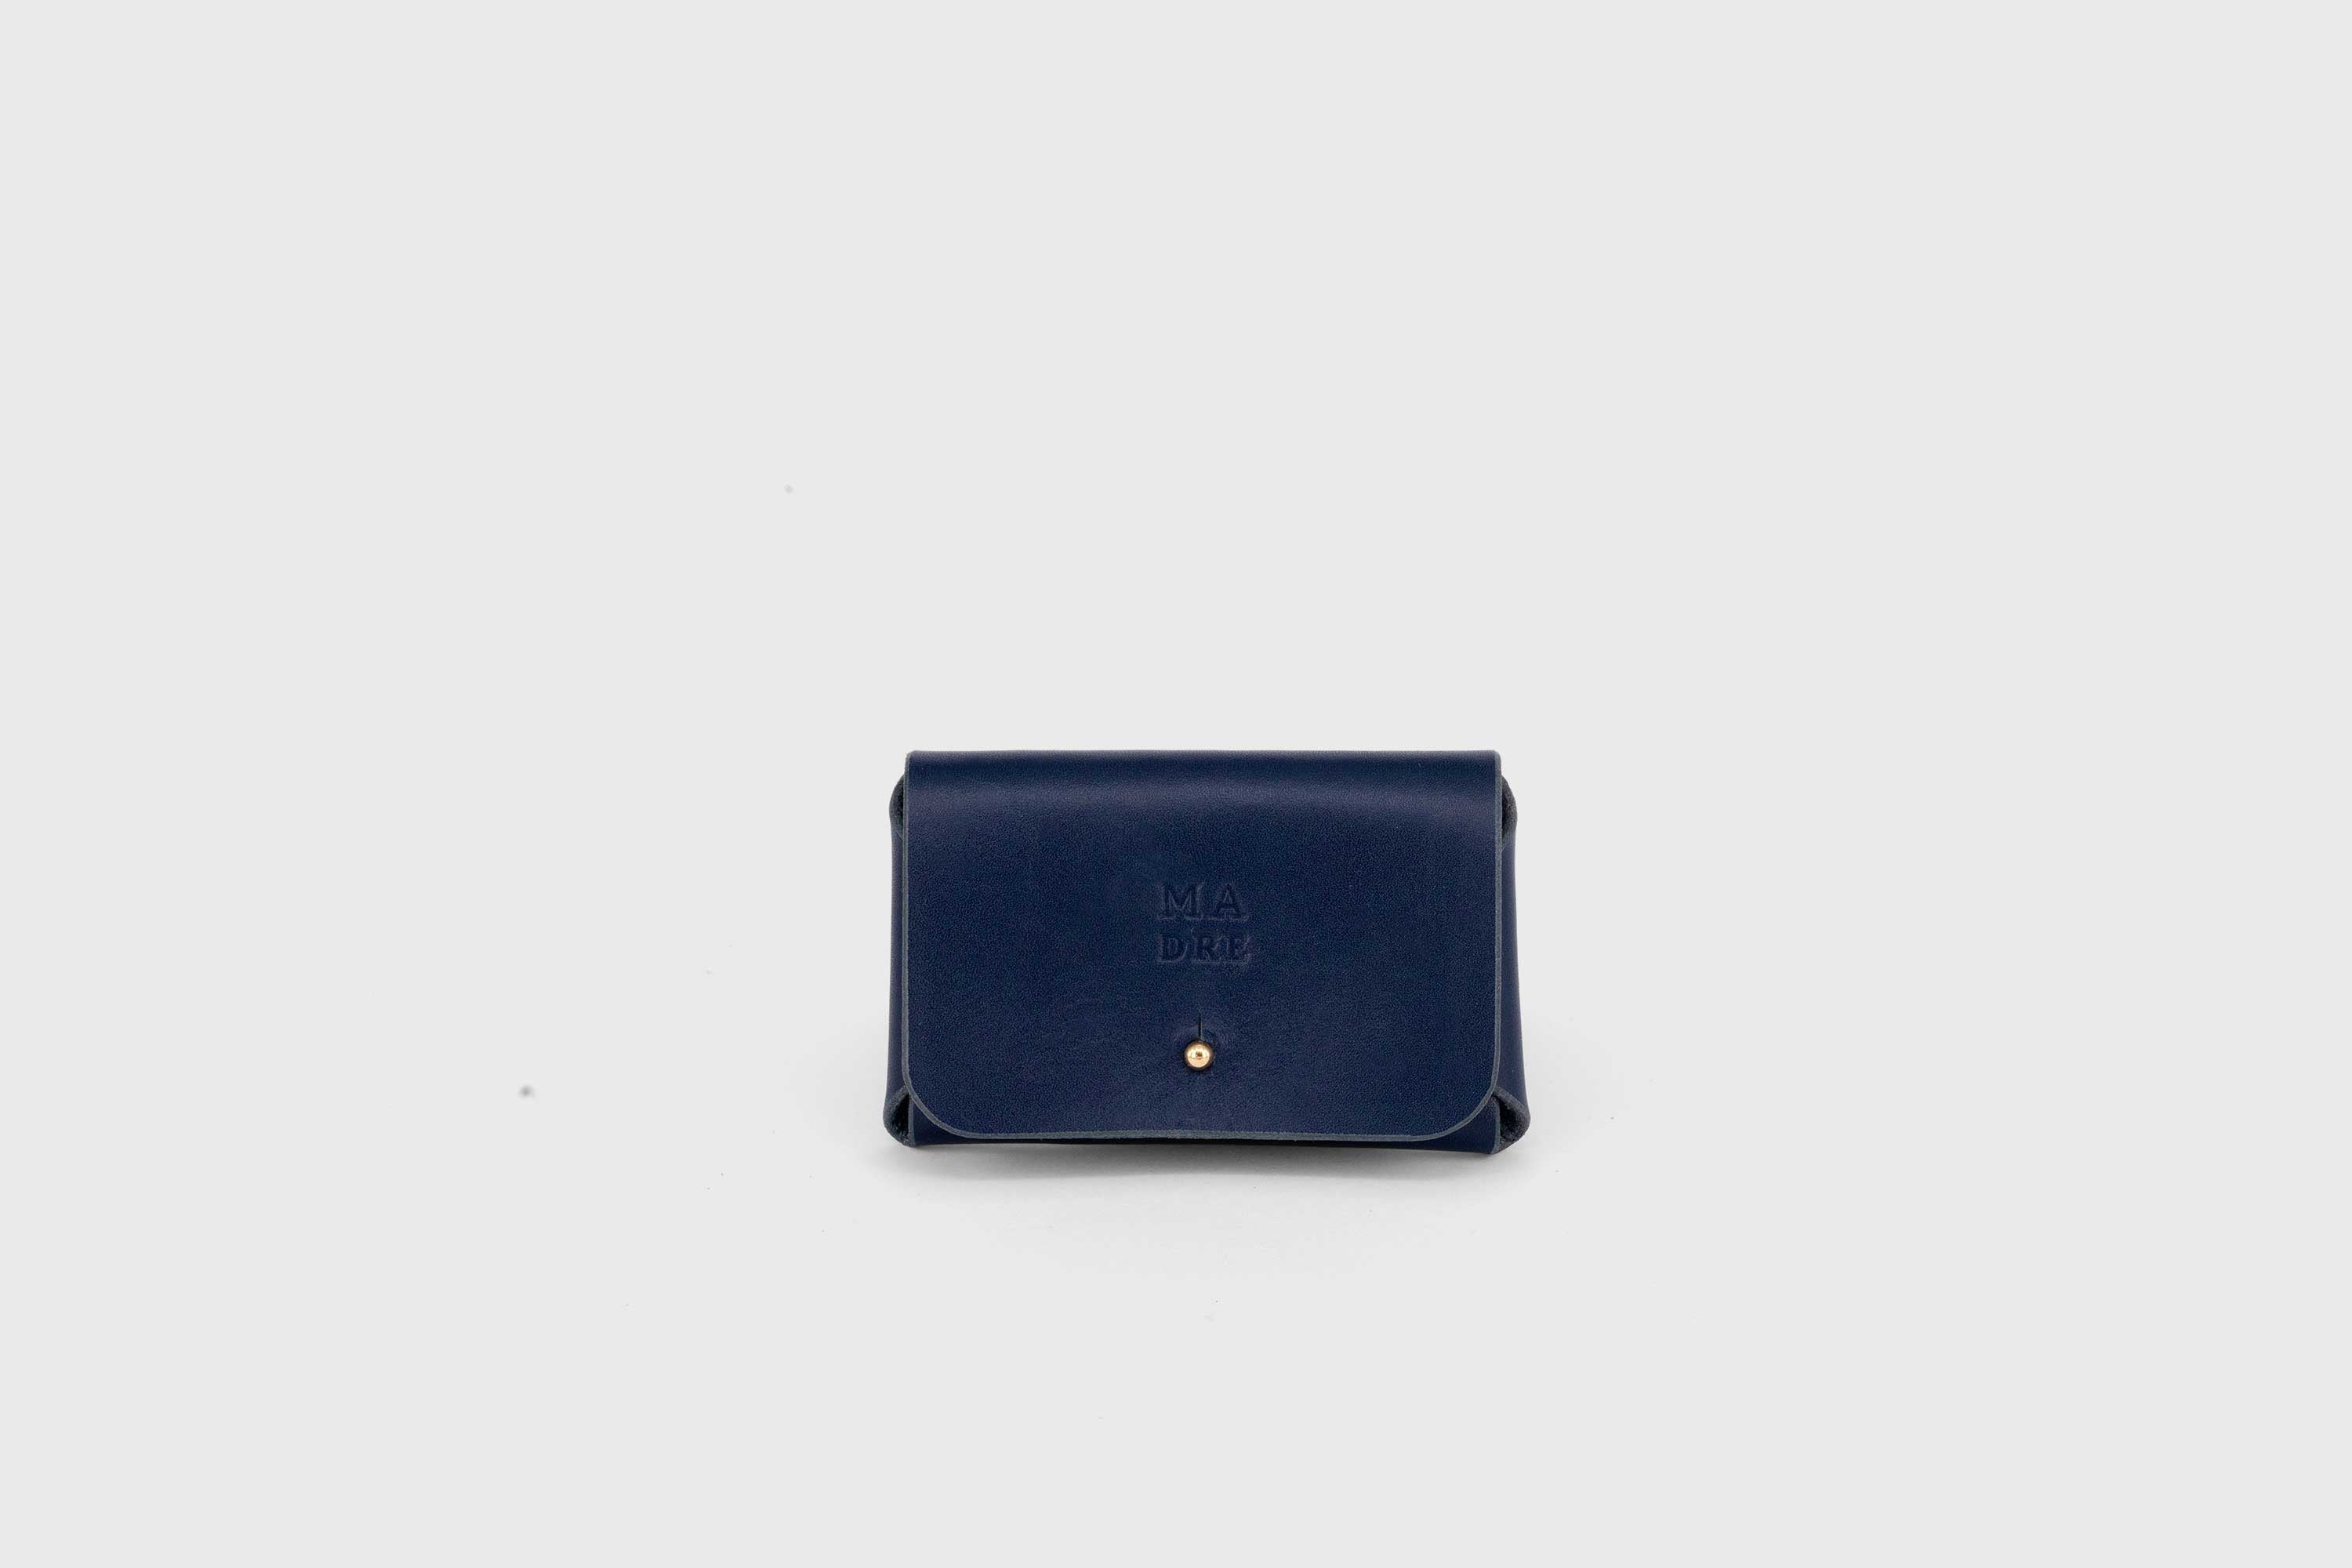 Leather wallet cardholder horizontal design marine blue color minimalist design atelier madre manuel dreesmann barcelona